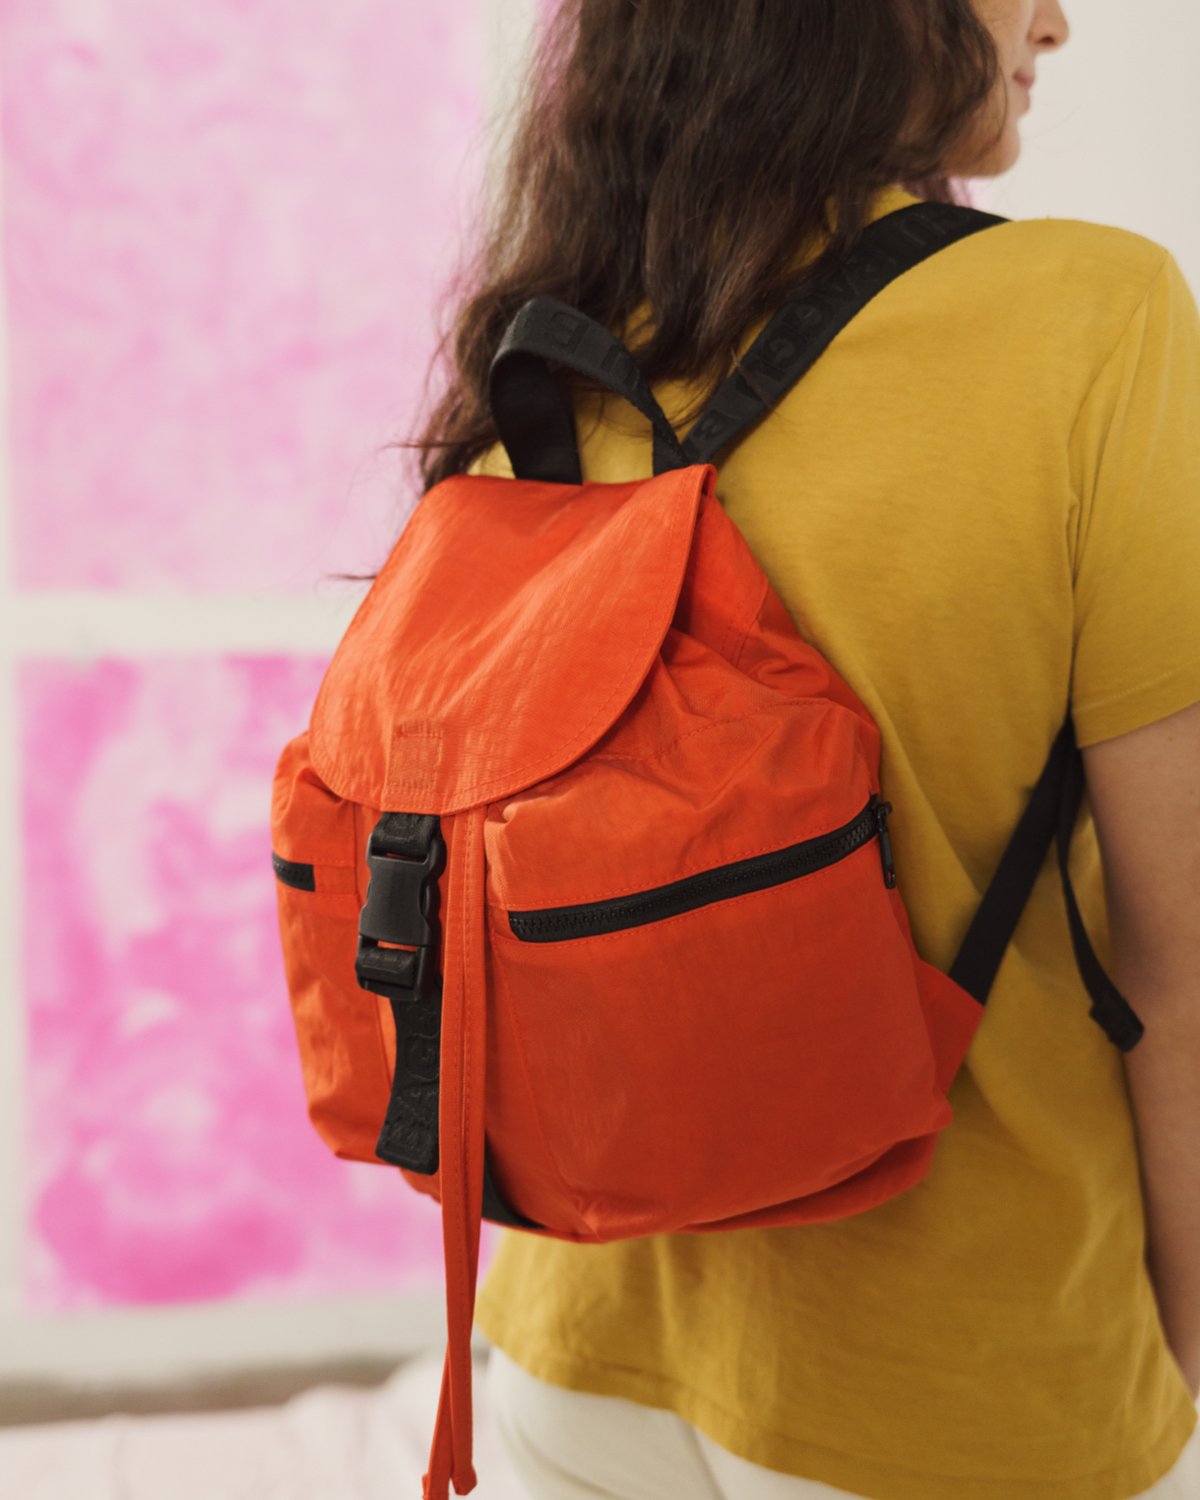 Baggu Small Sport Backpack - Tomato